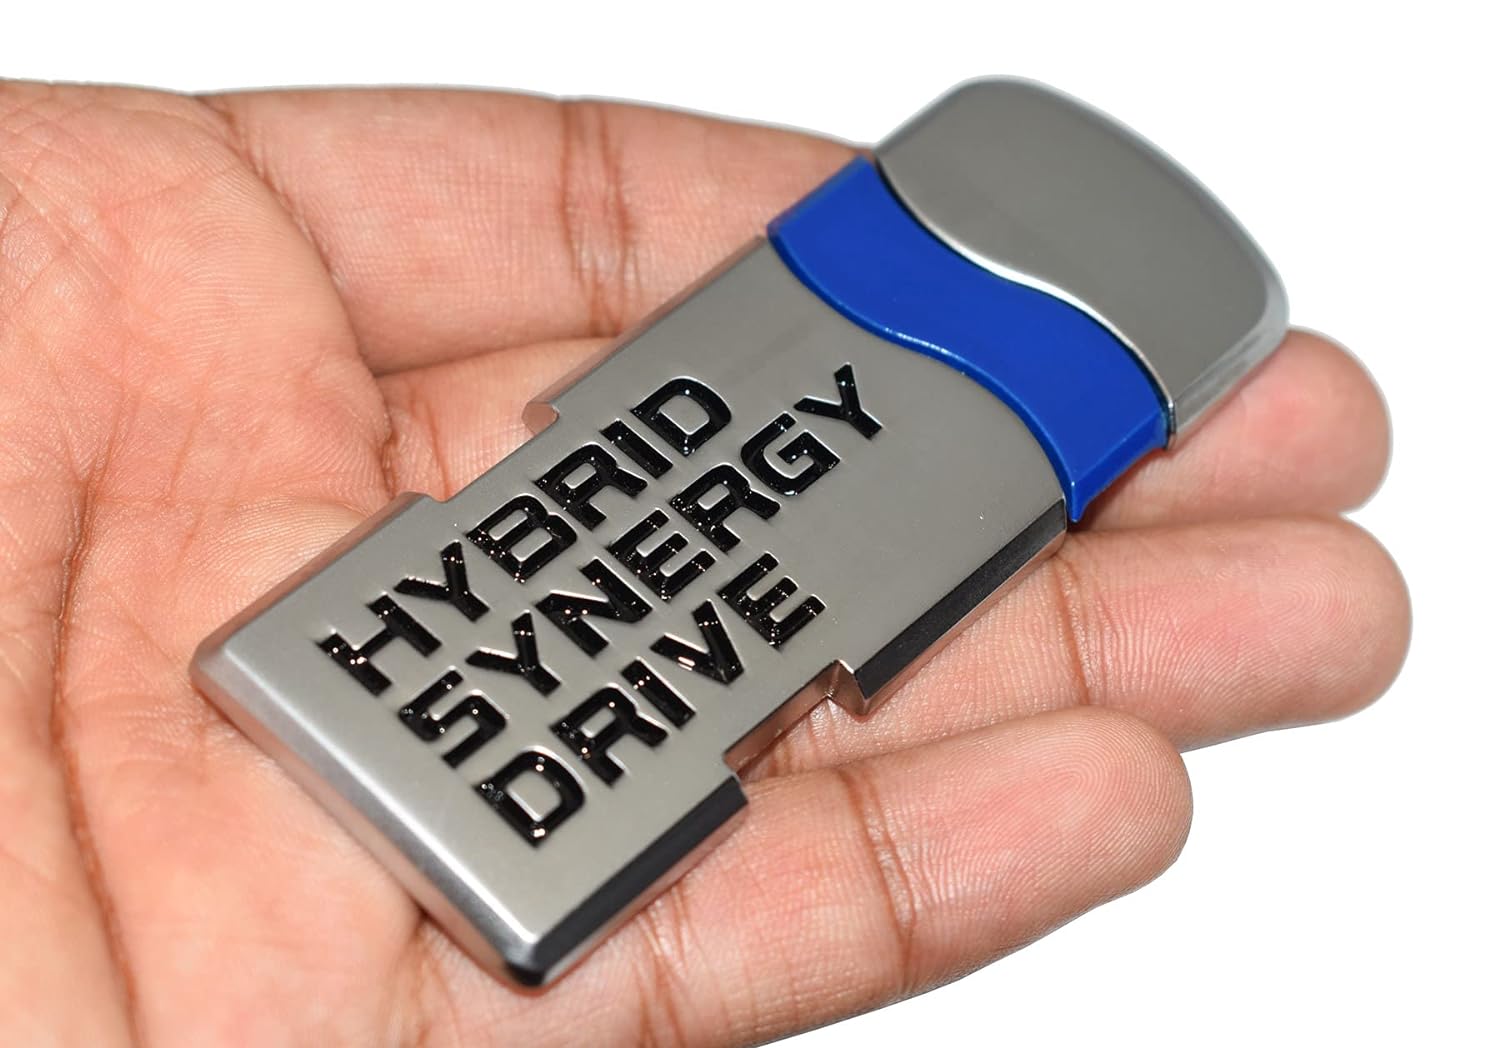 Caroxygen Hybrid Synergy Drive Badge Sticker for All Cars, Metal